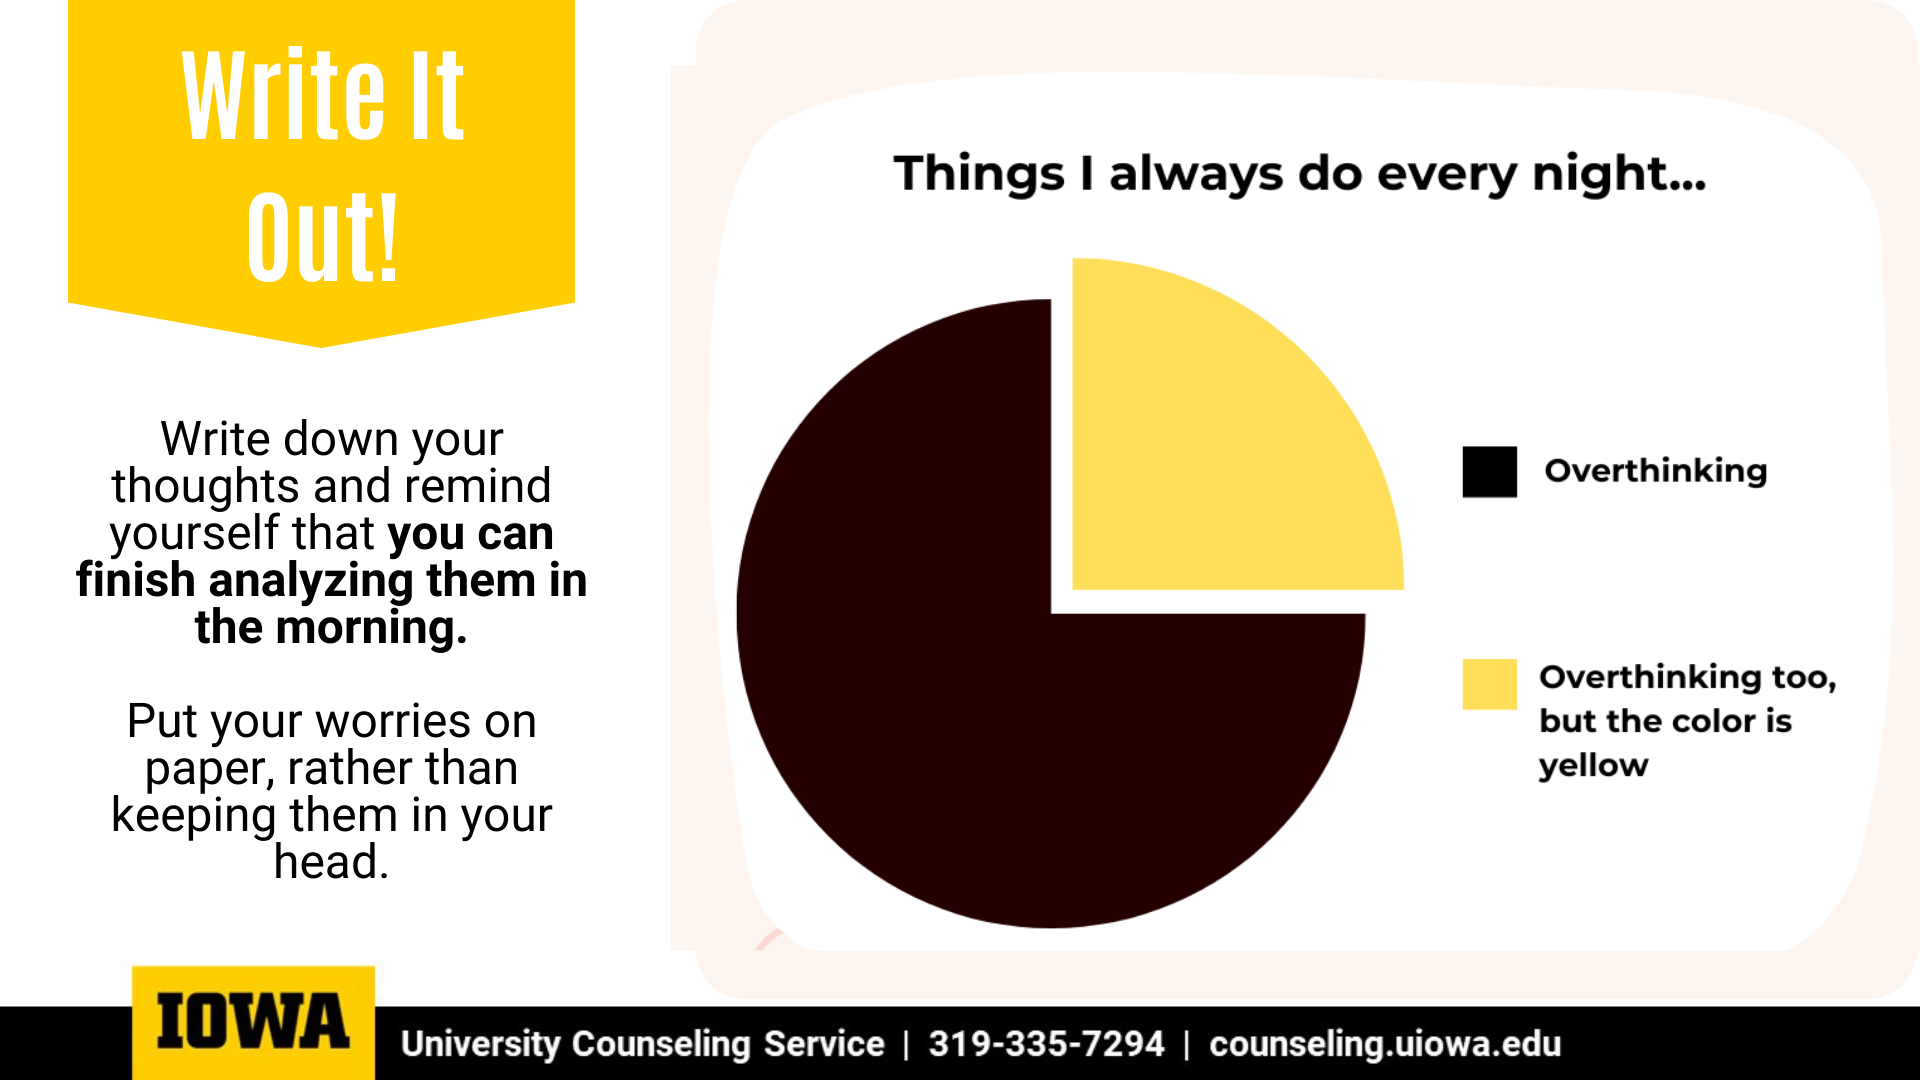 University Counseling Service - Write It Out!